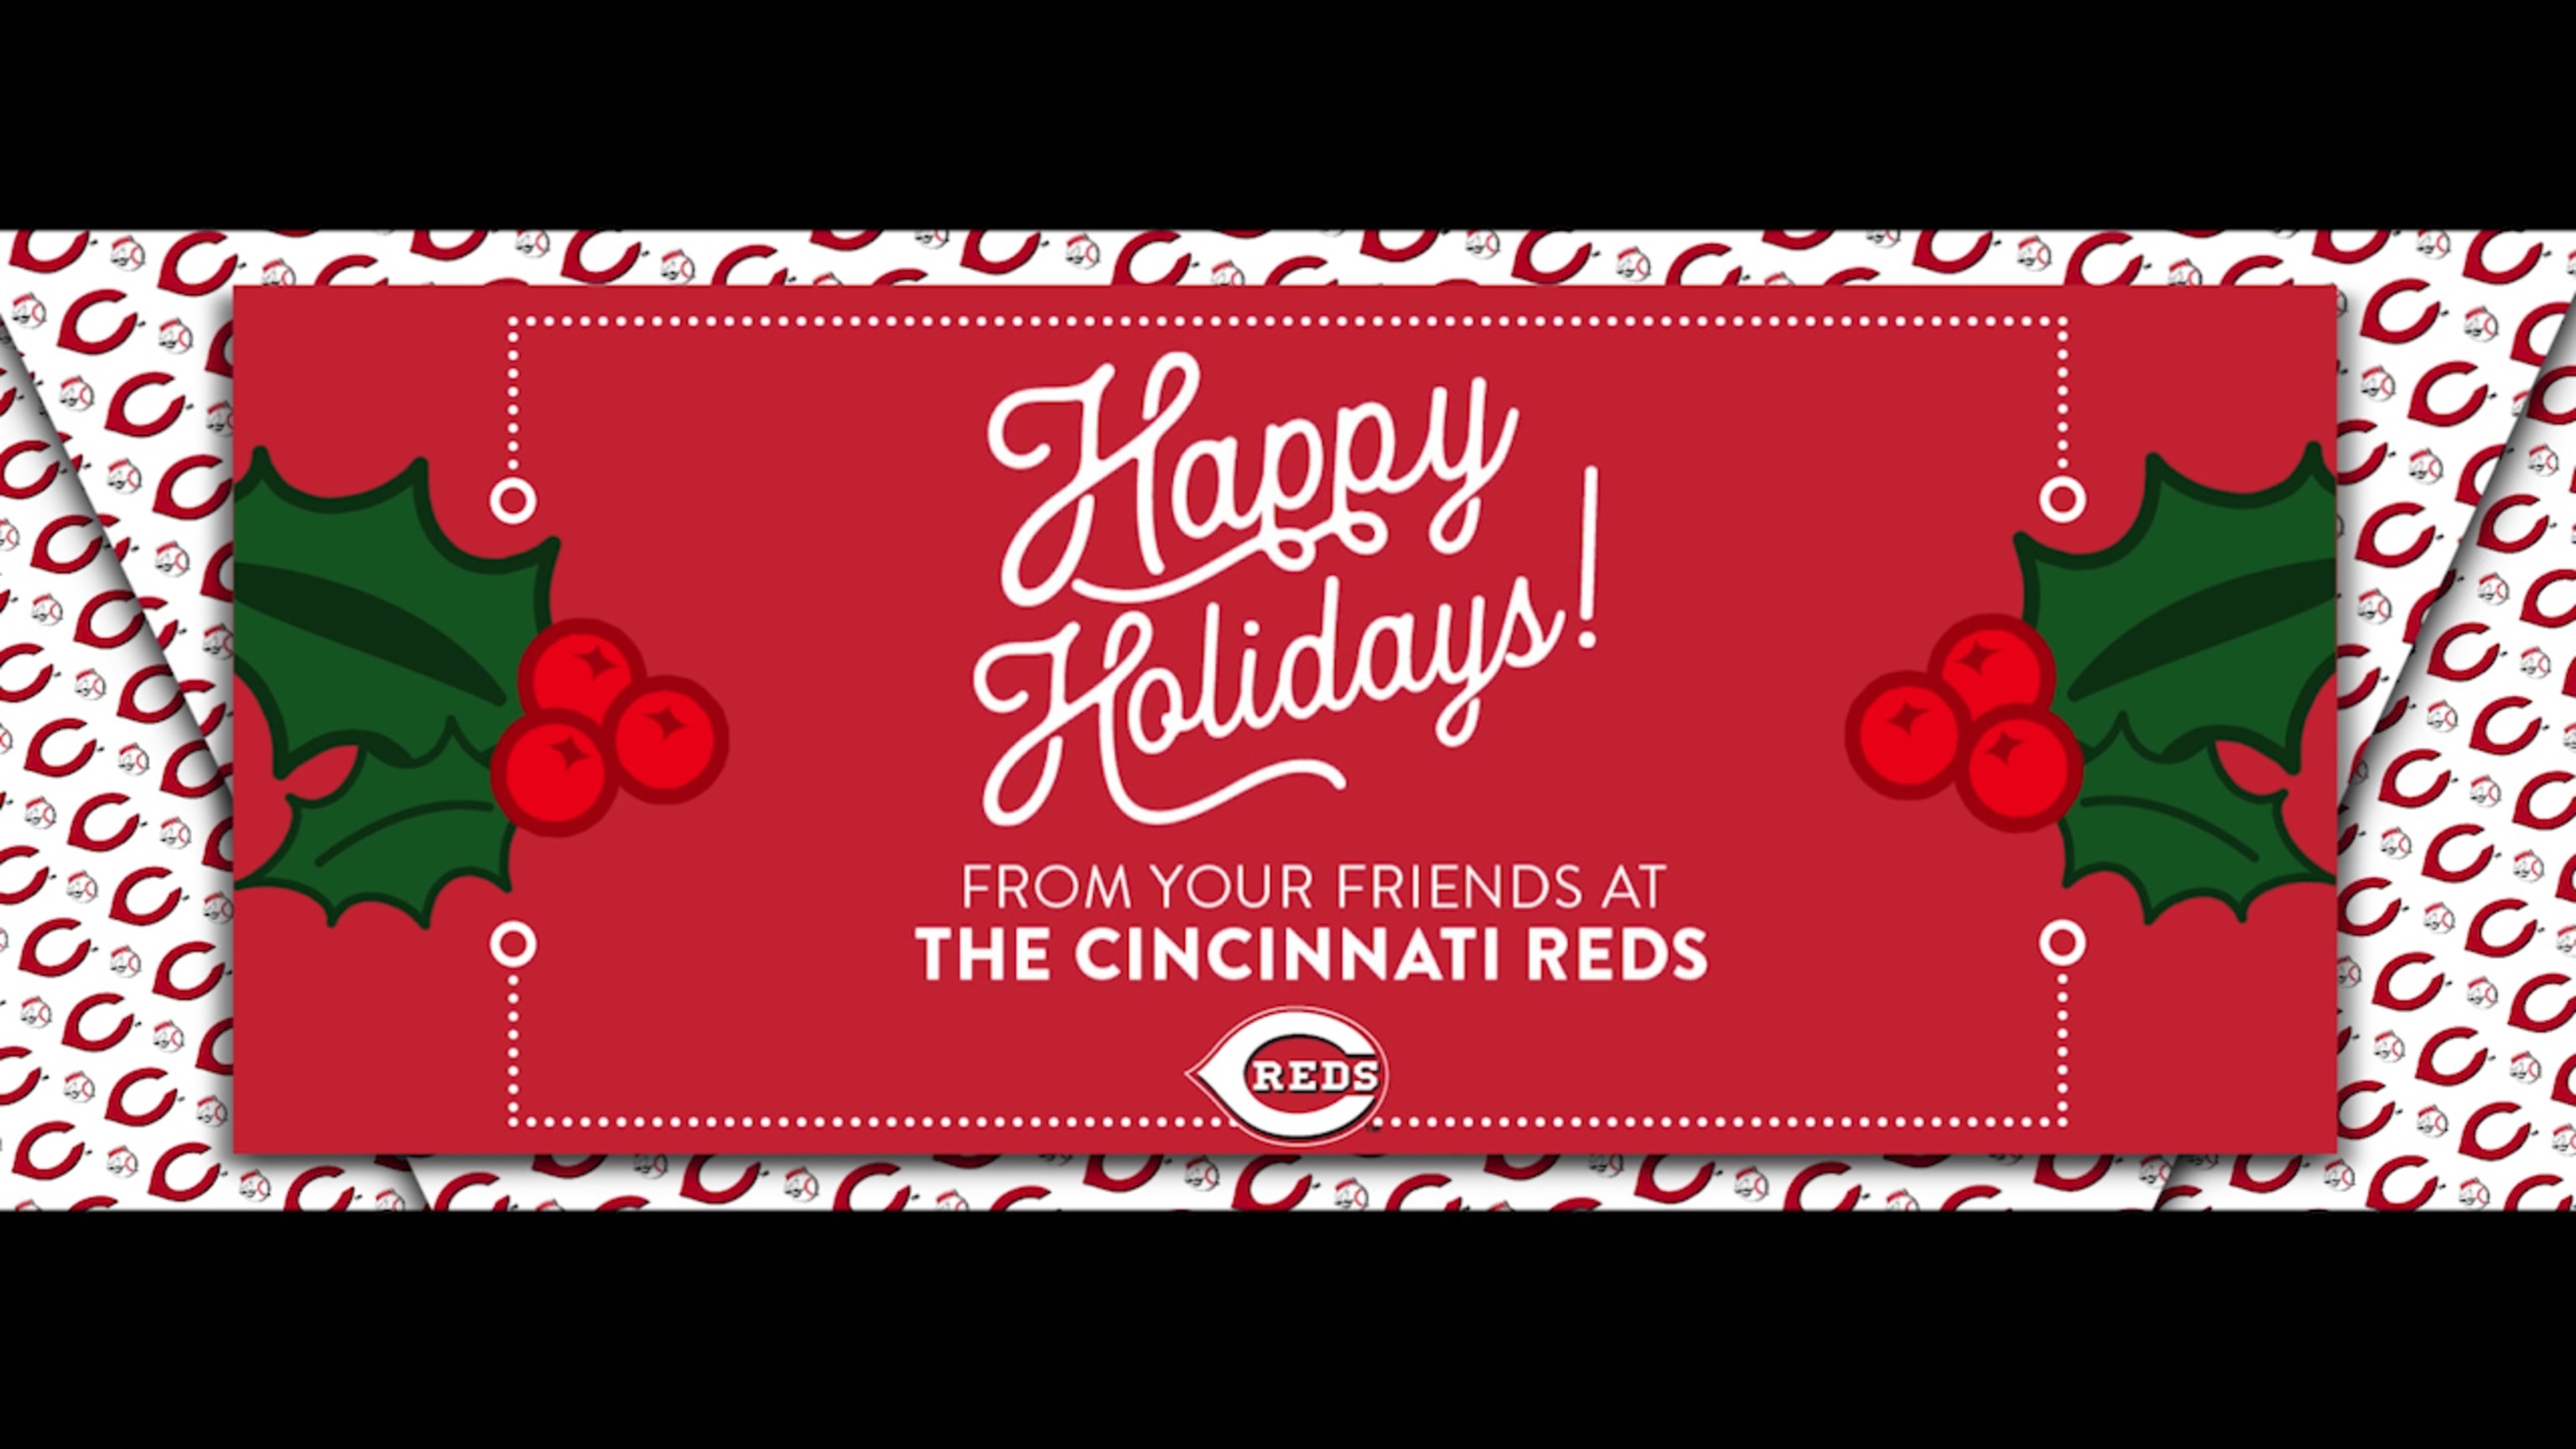 Season S Greetings From The Reds Cincinnati Reds